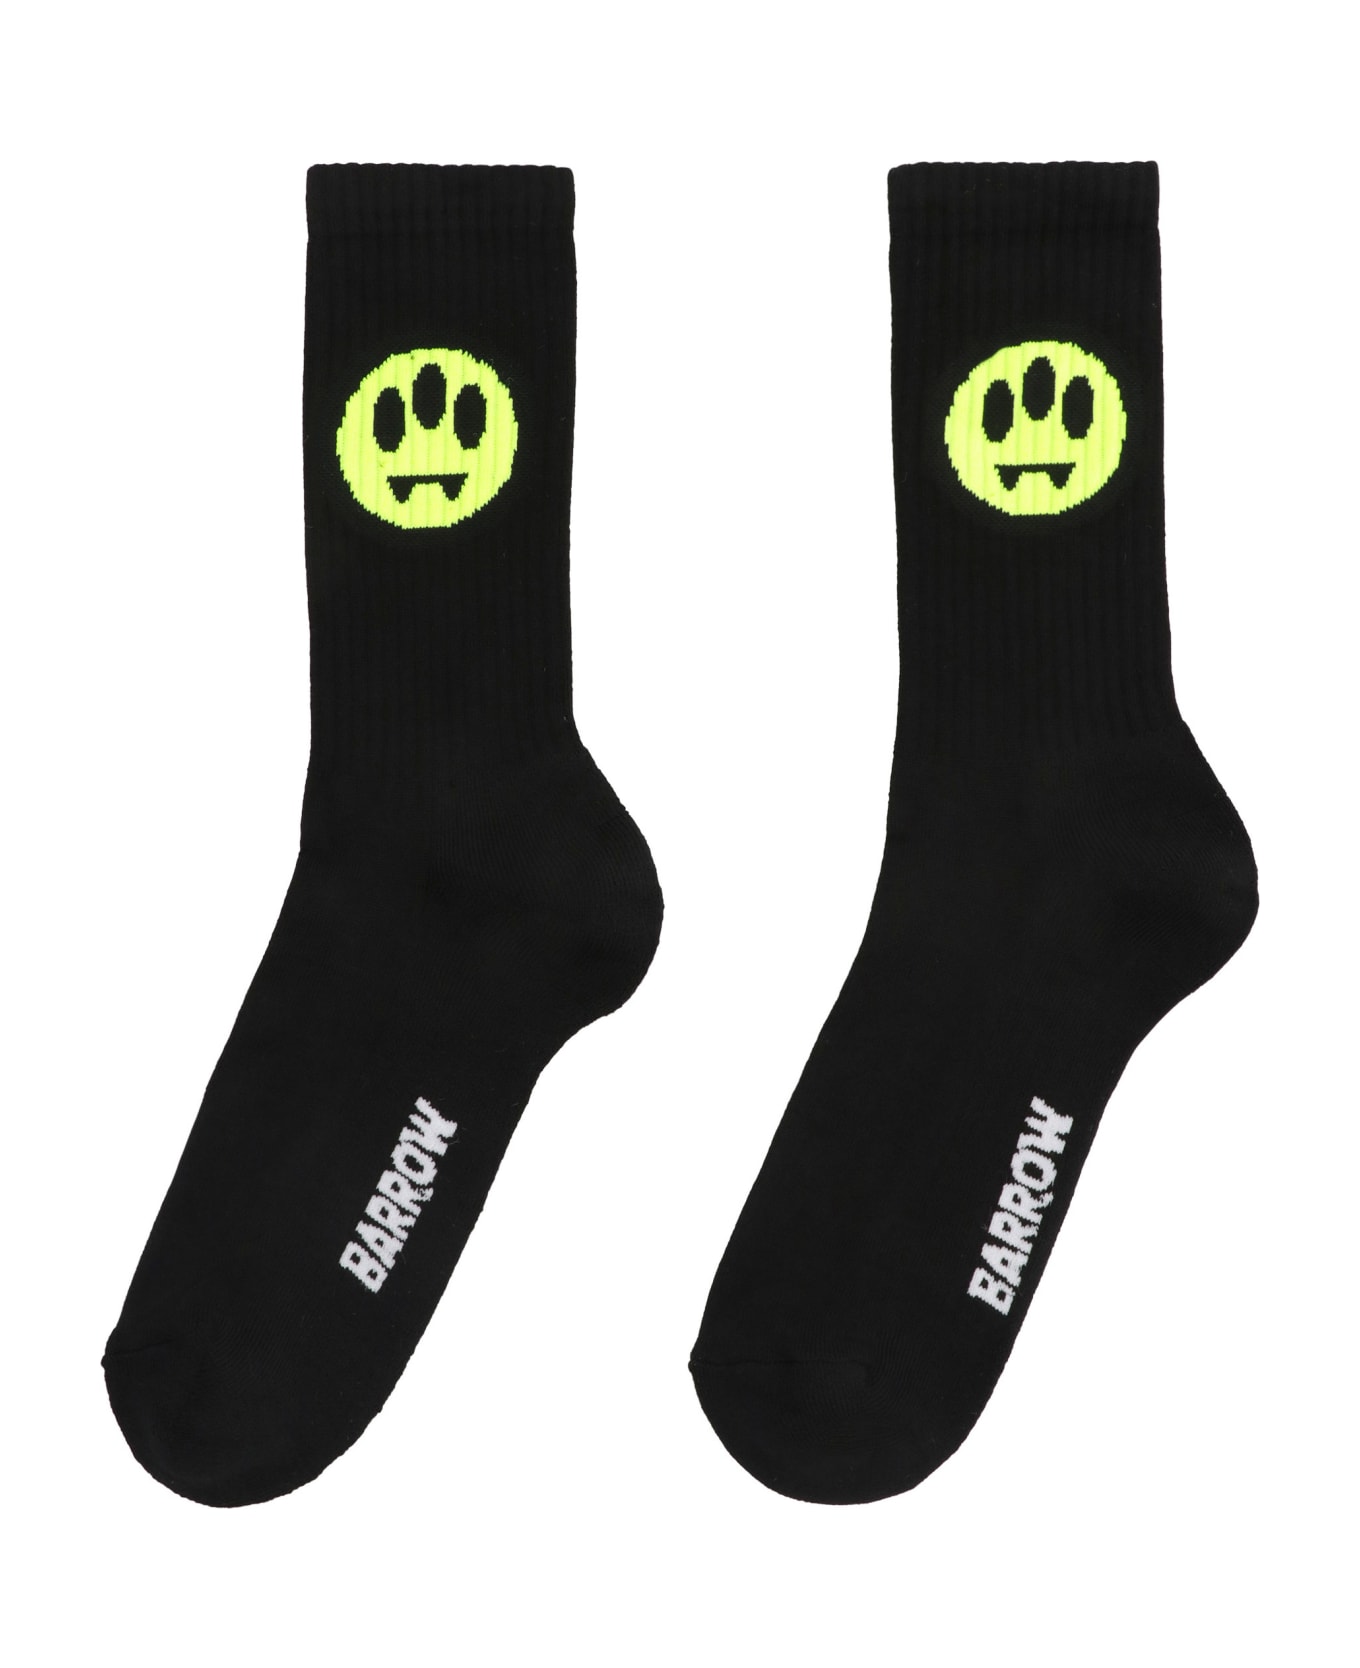 Barrow Black Socks With Logo - Black 靴下